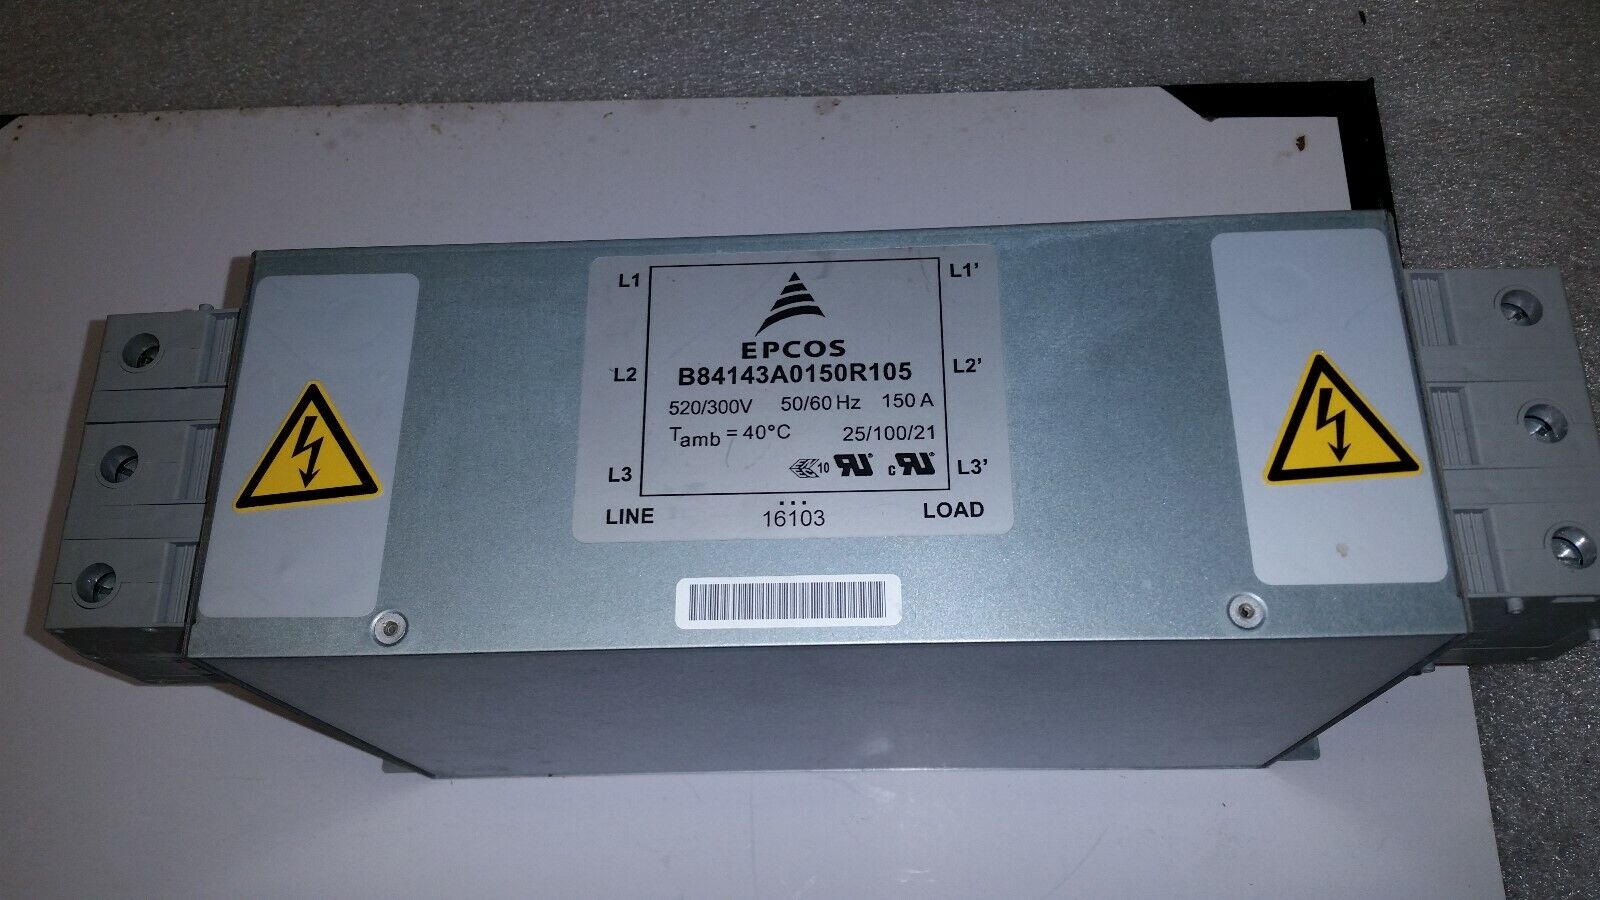 EPCOS: Manufacturer #: B84143A0150R105, 3-line EMC filter 520/300 VAC 150A